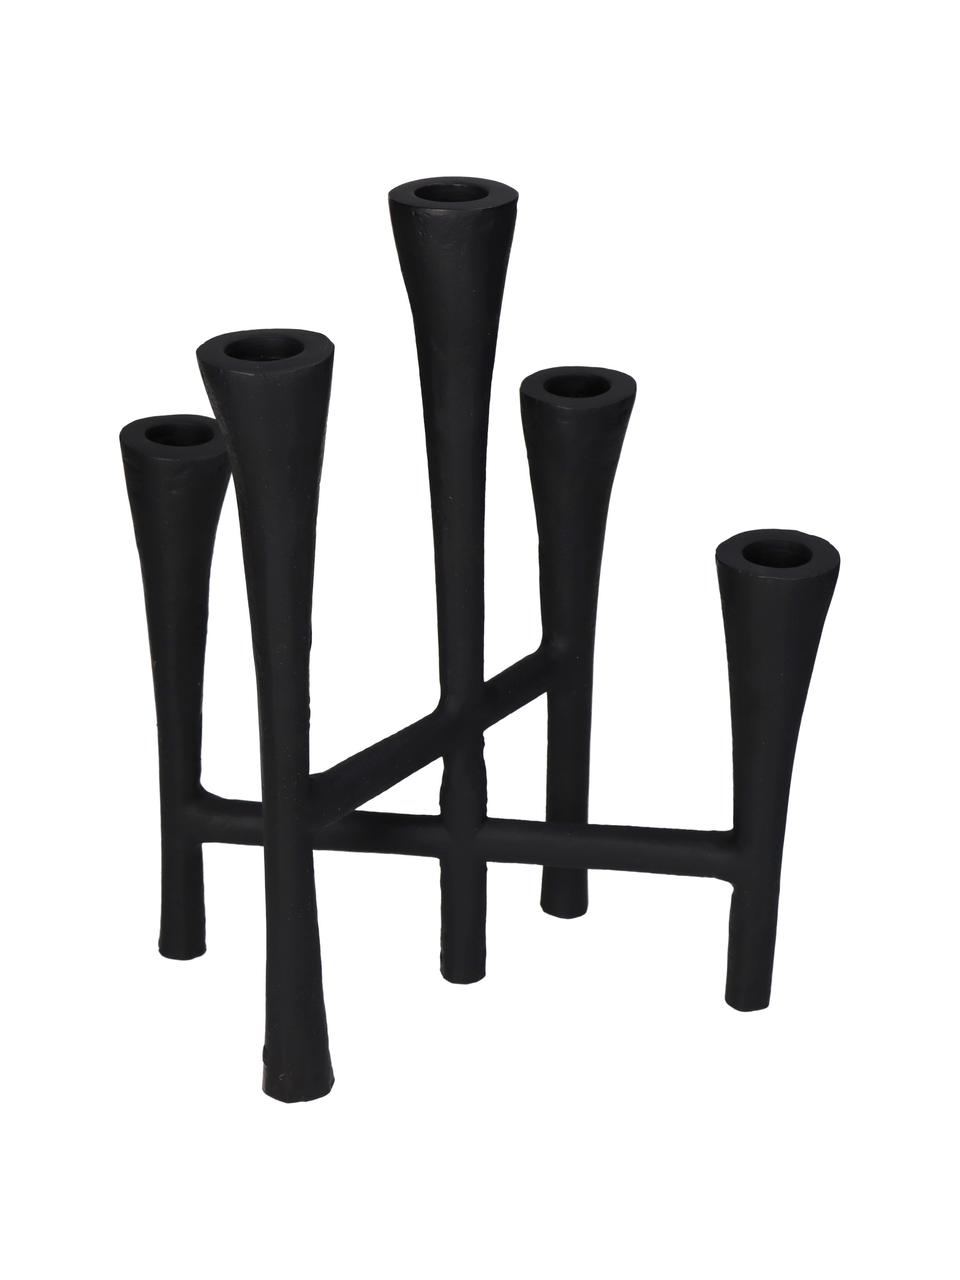 Kandelaar Duo in zwart, Gecoat aluminium, Zwart, B 24 cm x H 29 cm